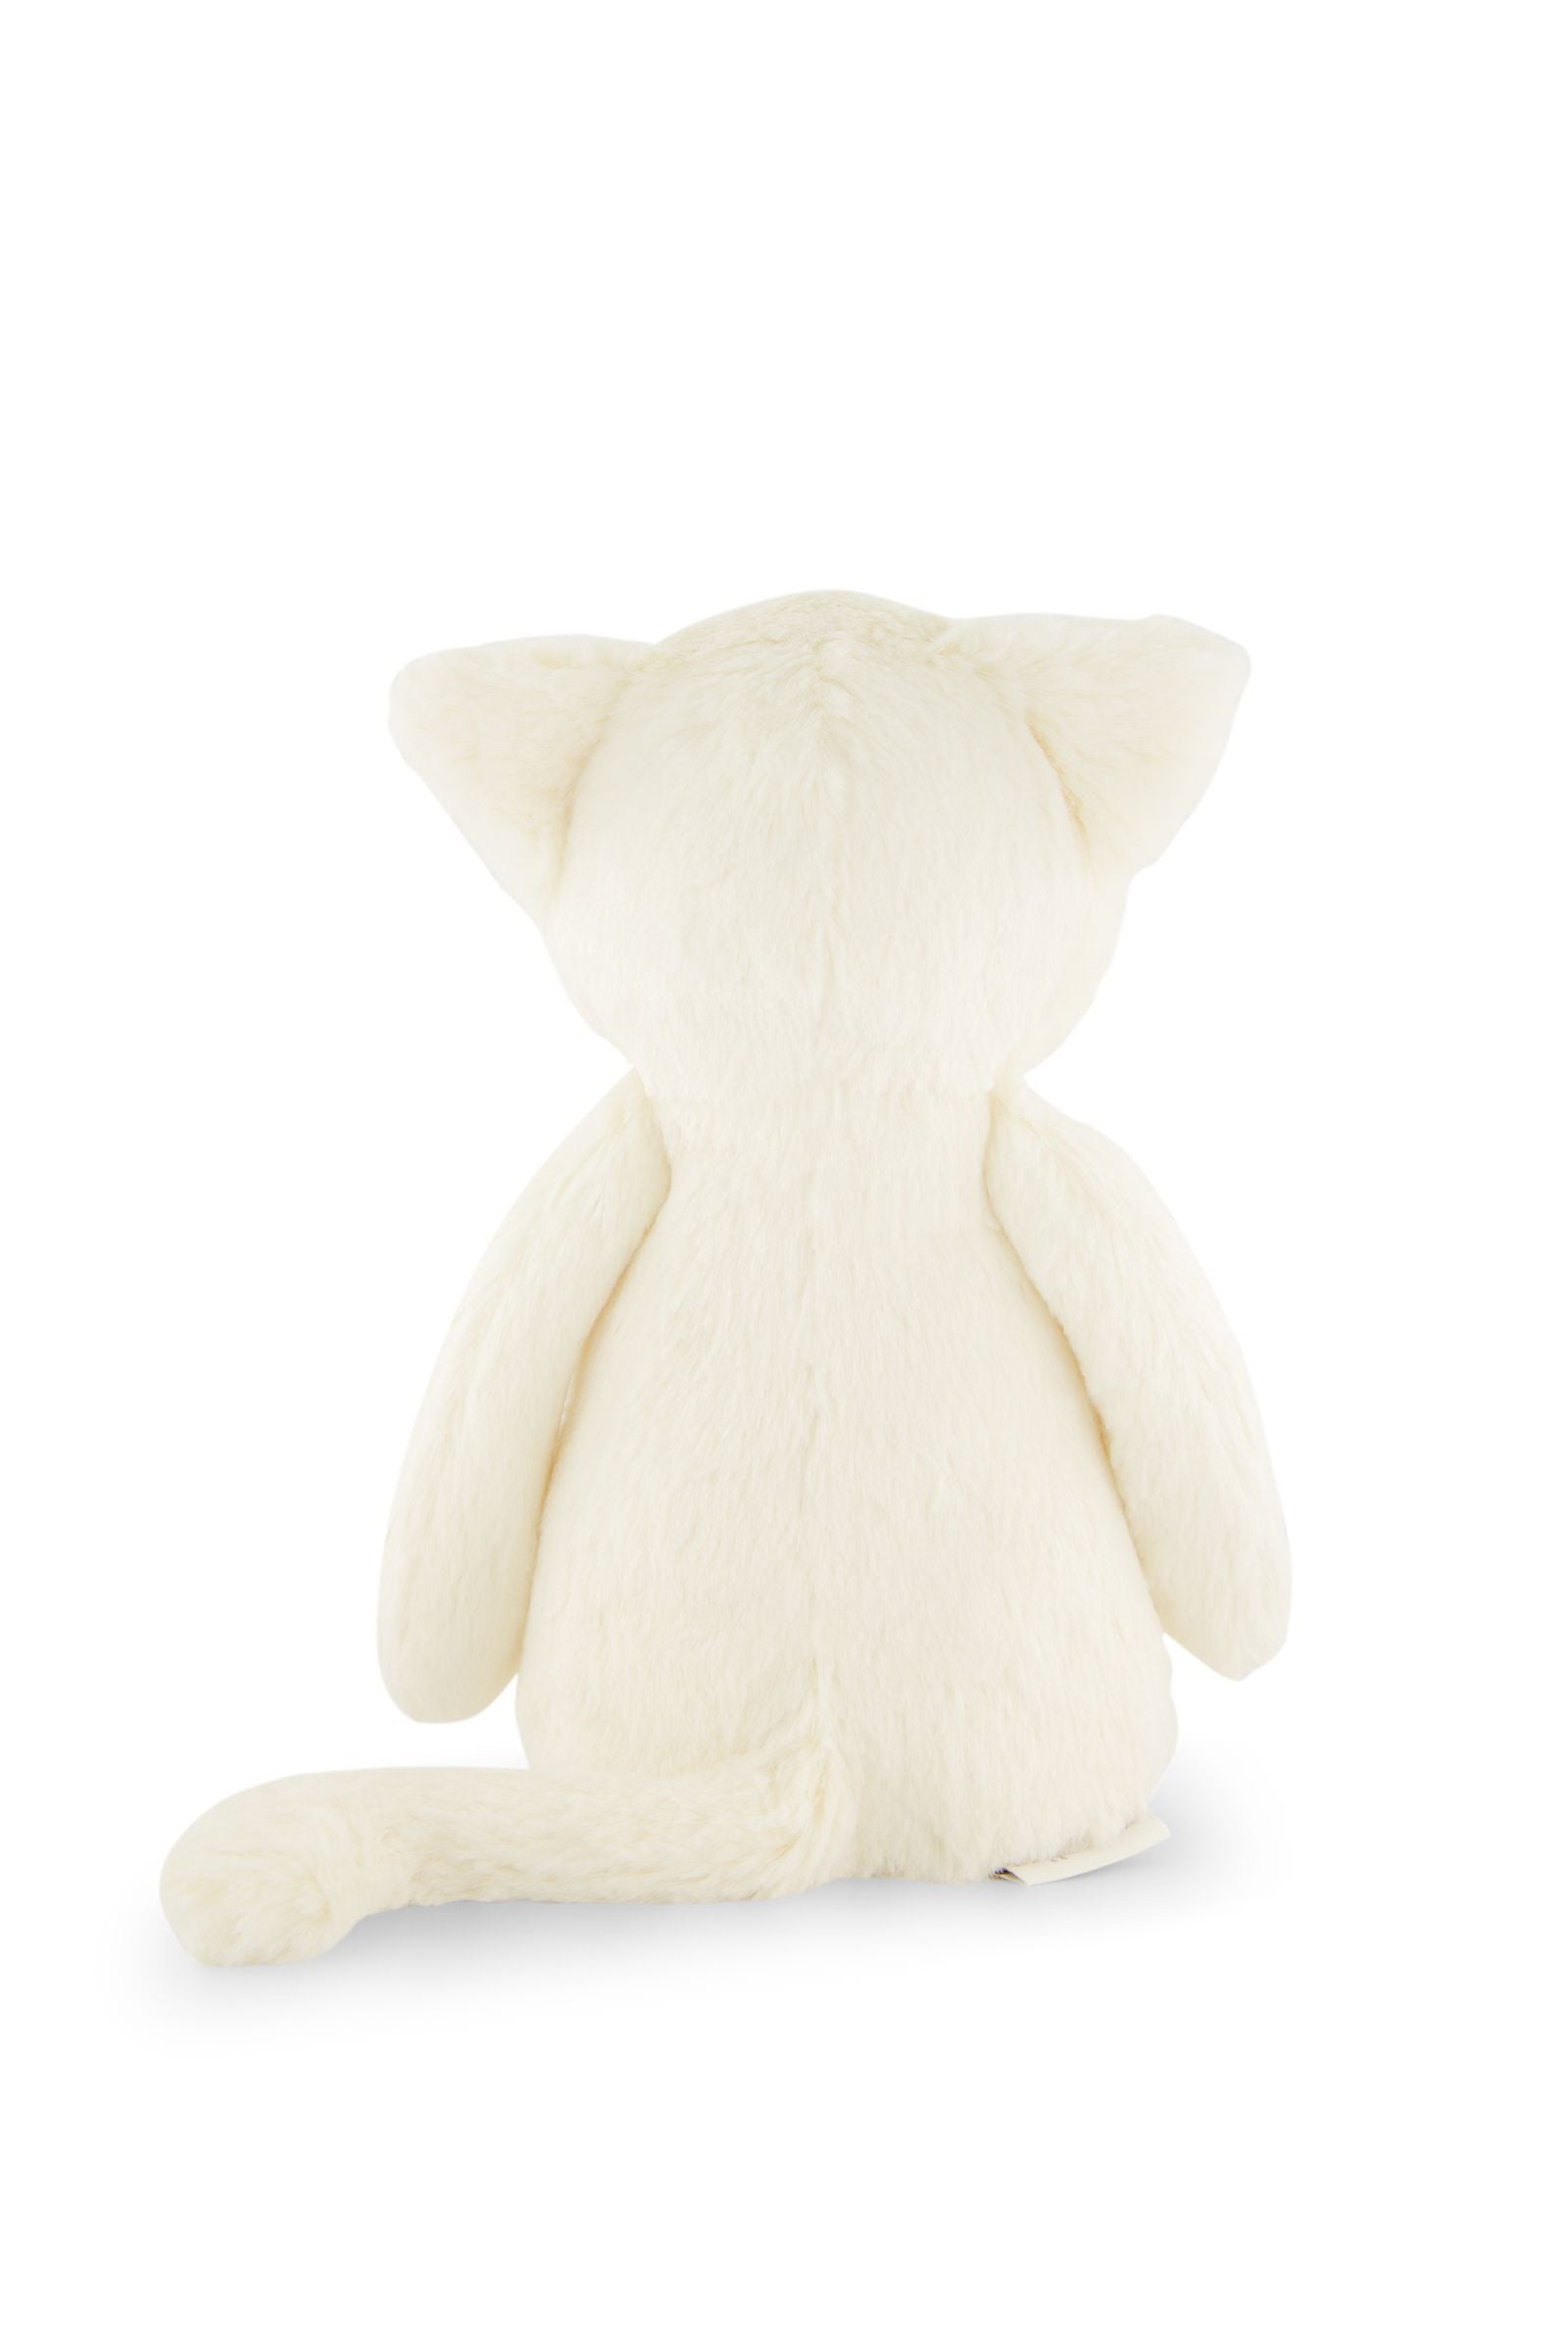 Snuggle Bunnies - Elsie the Kitty - Marshmallow 30cm-Toys-Jamie Kay-The Bay Room